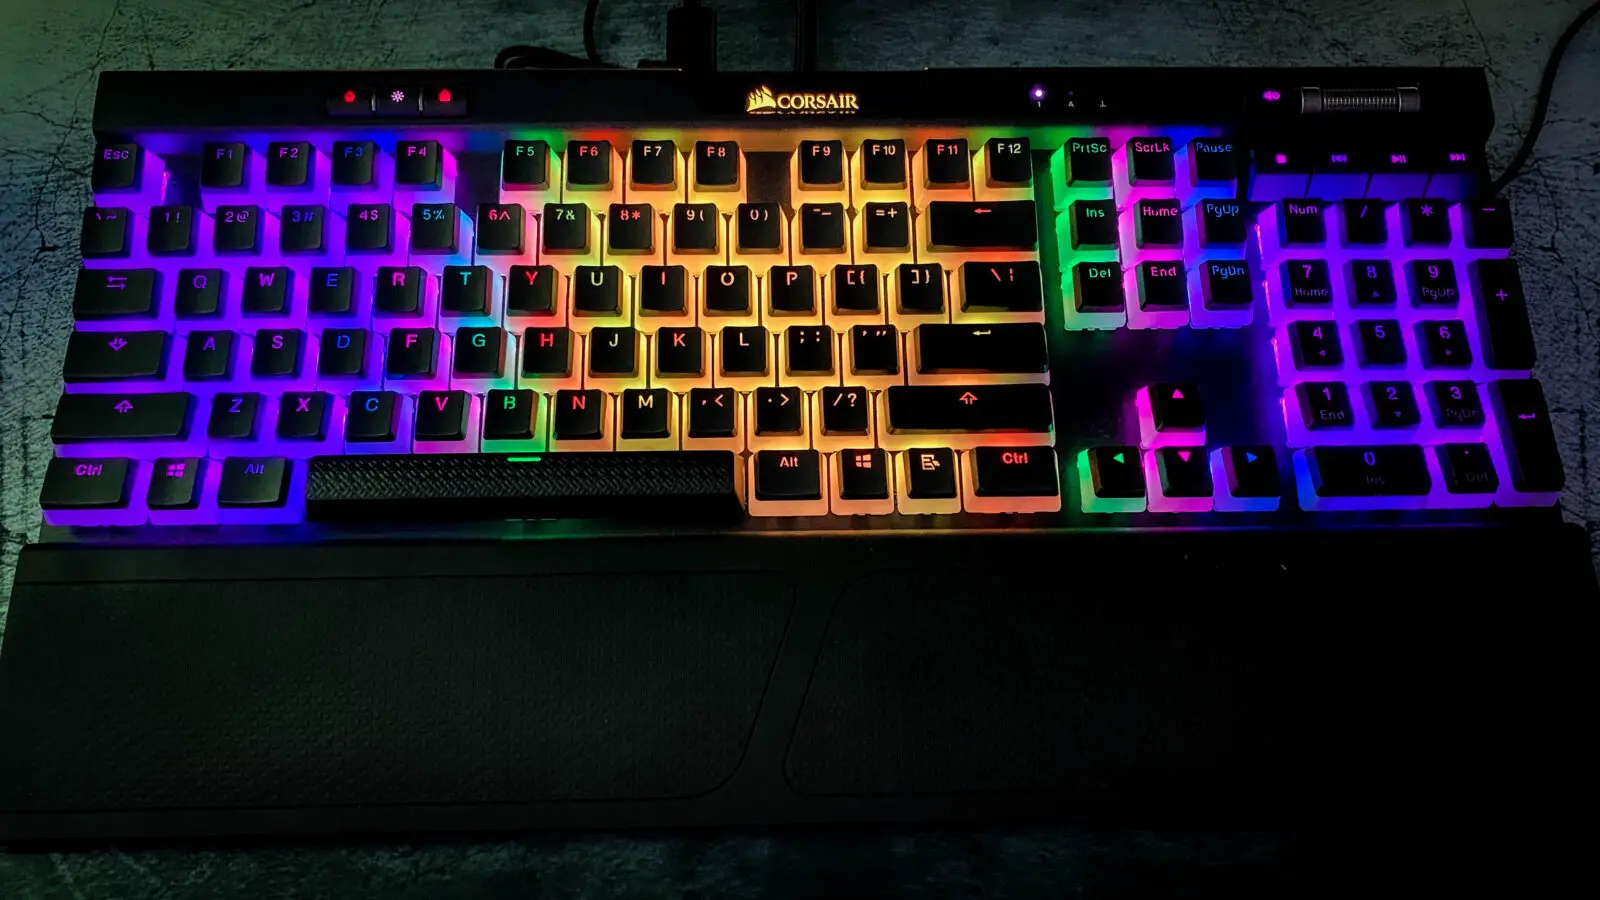 Corsair Rainbow Madness RGB keyboard